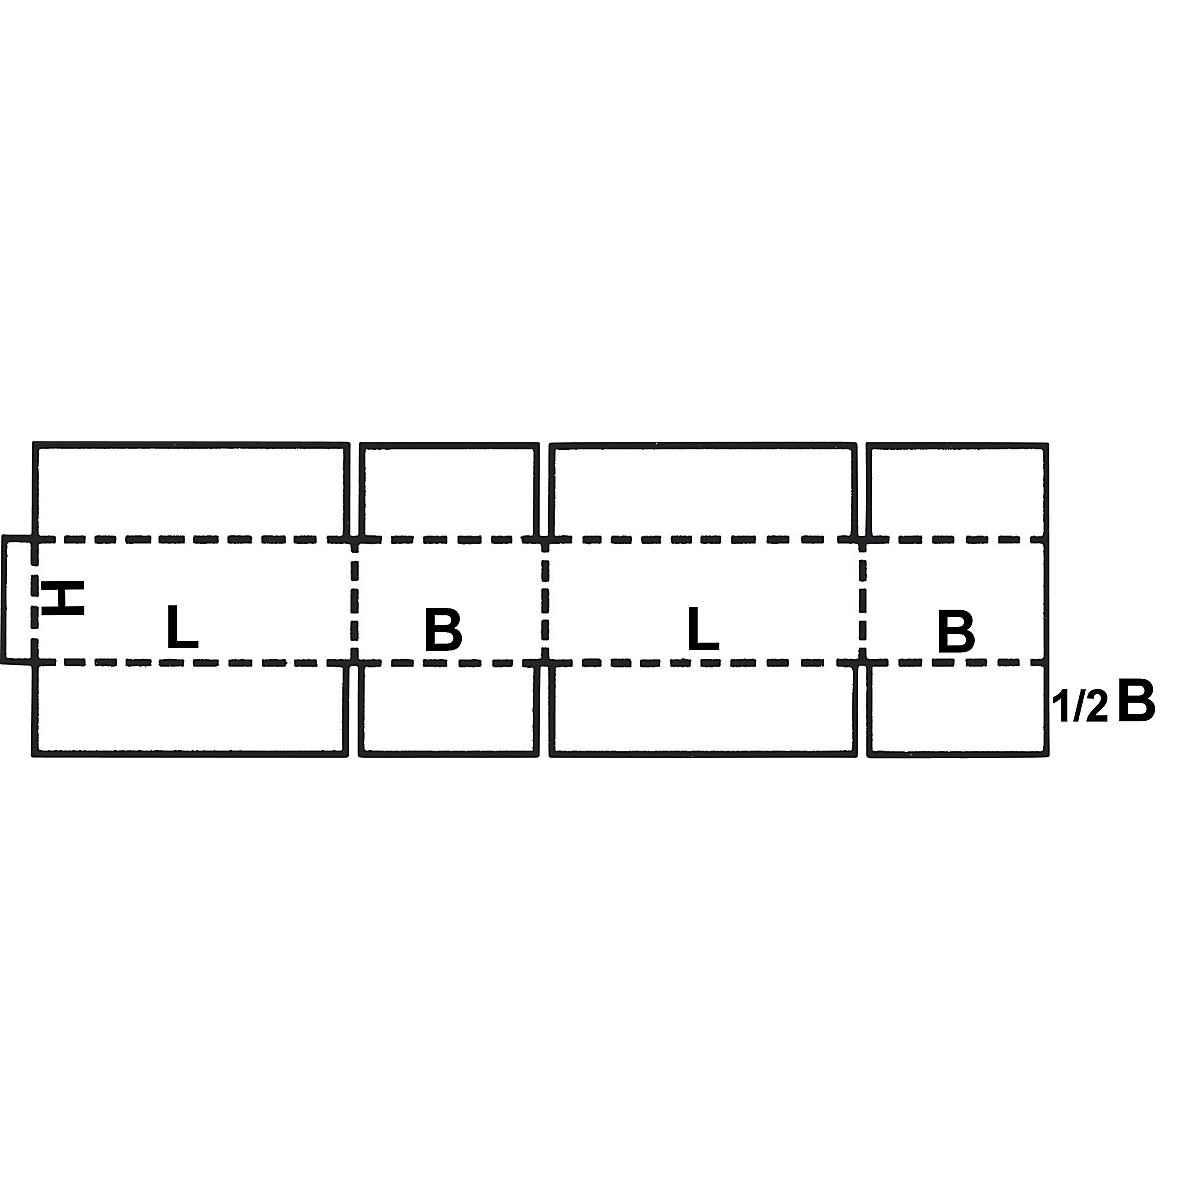 Caja plegable, FEFCO 0201 (Imagen del producto 383)-382